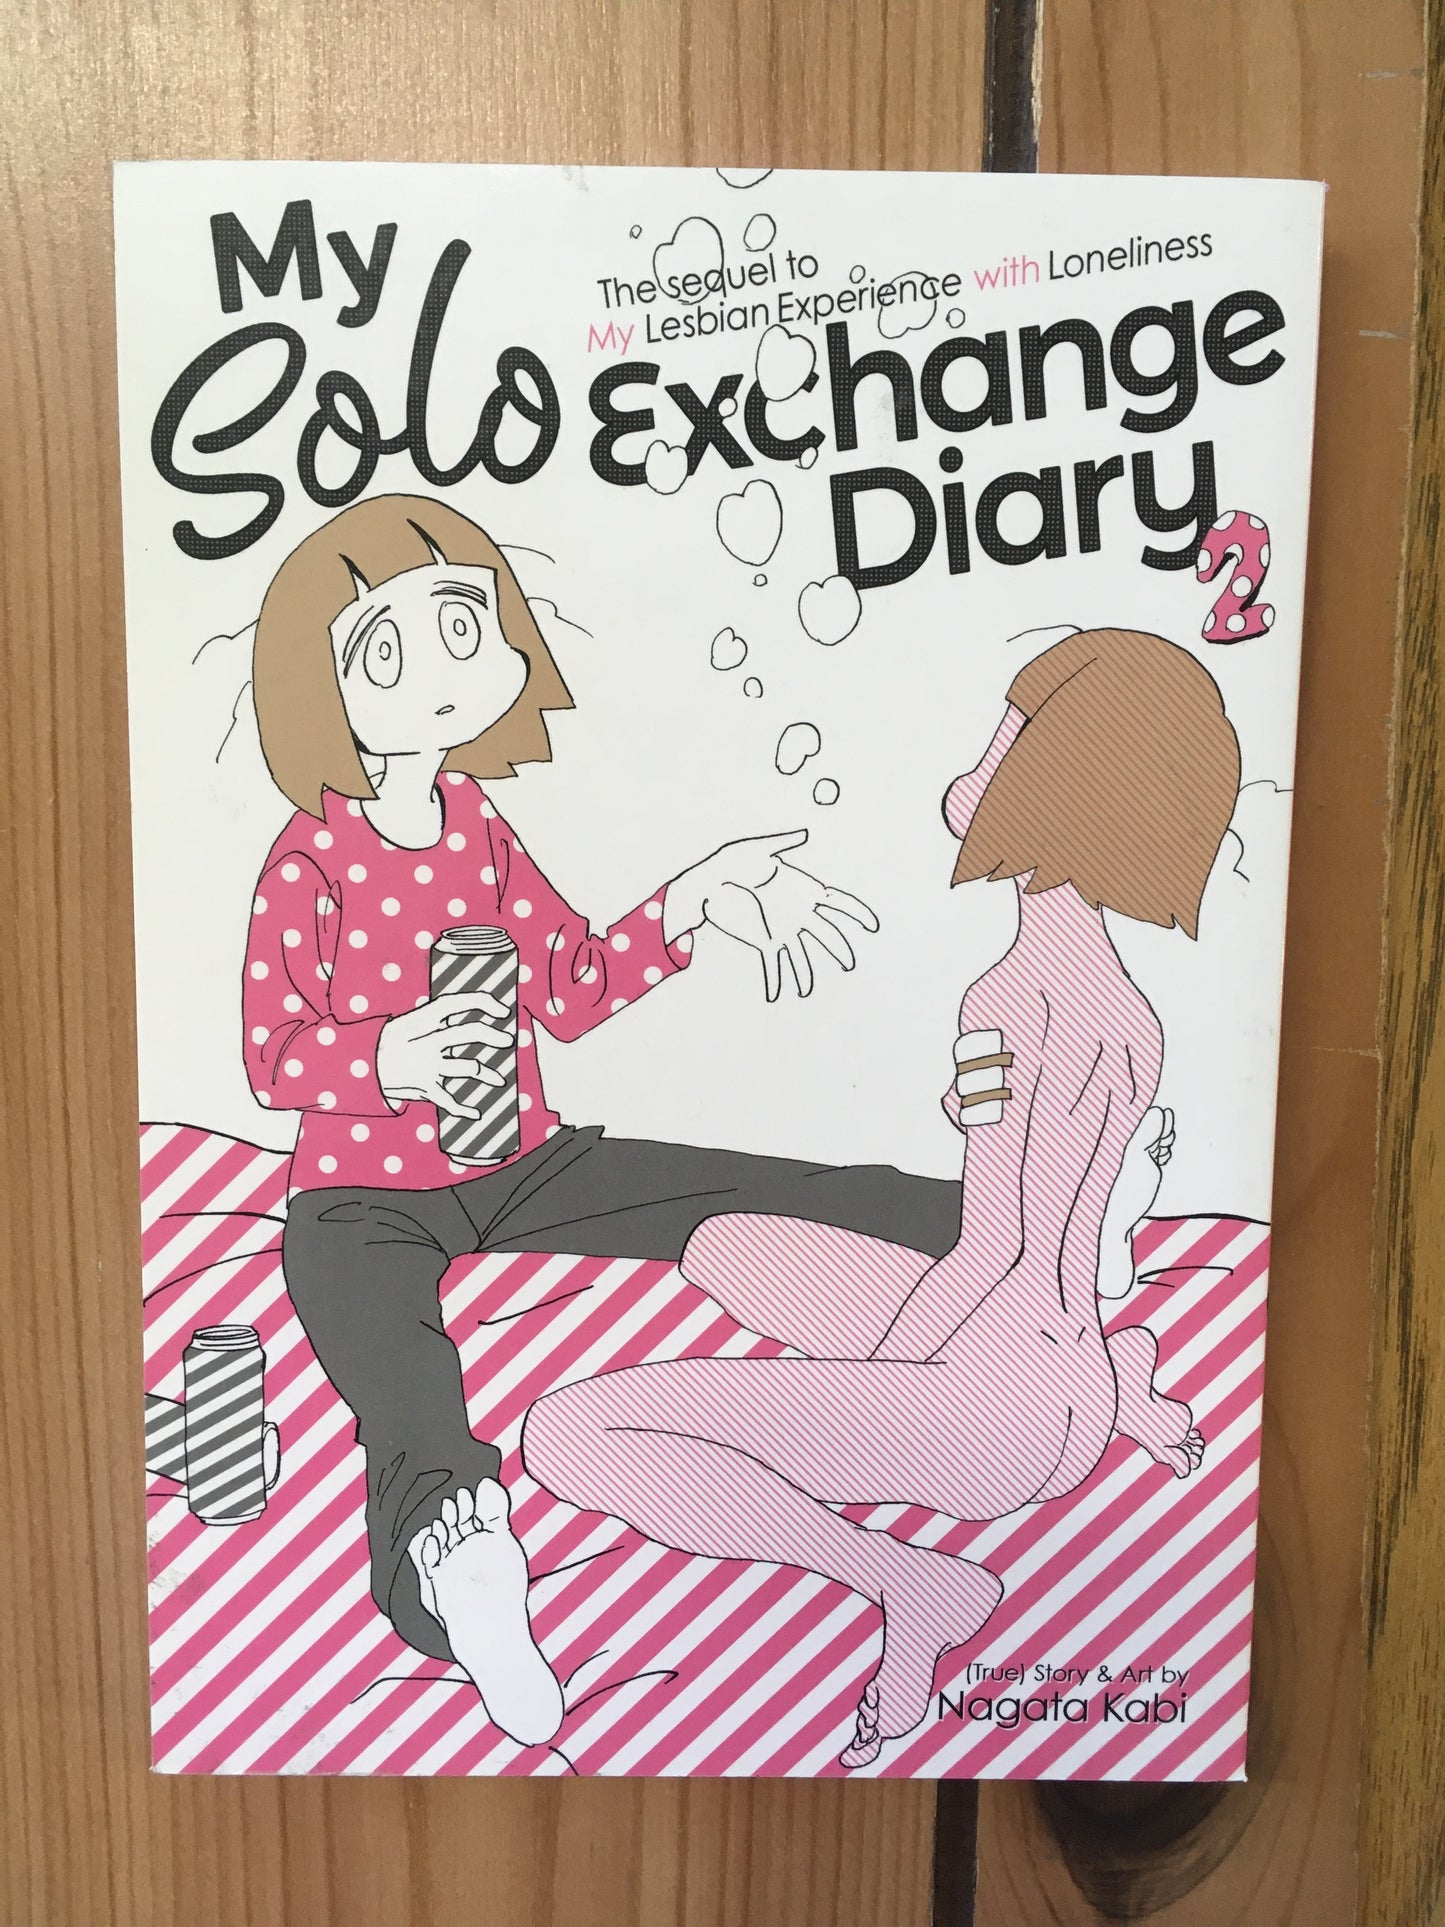 My Solo Exchange Diary Vol 2